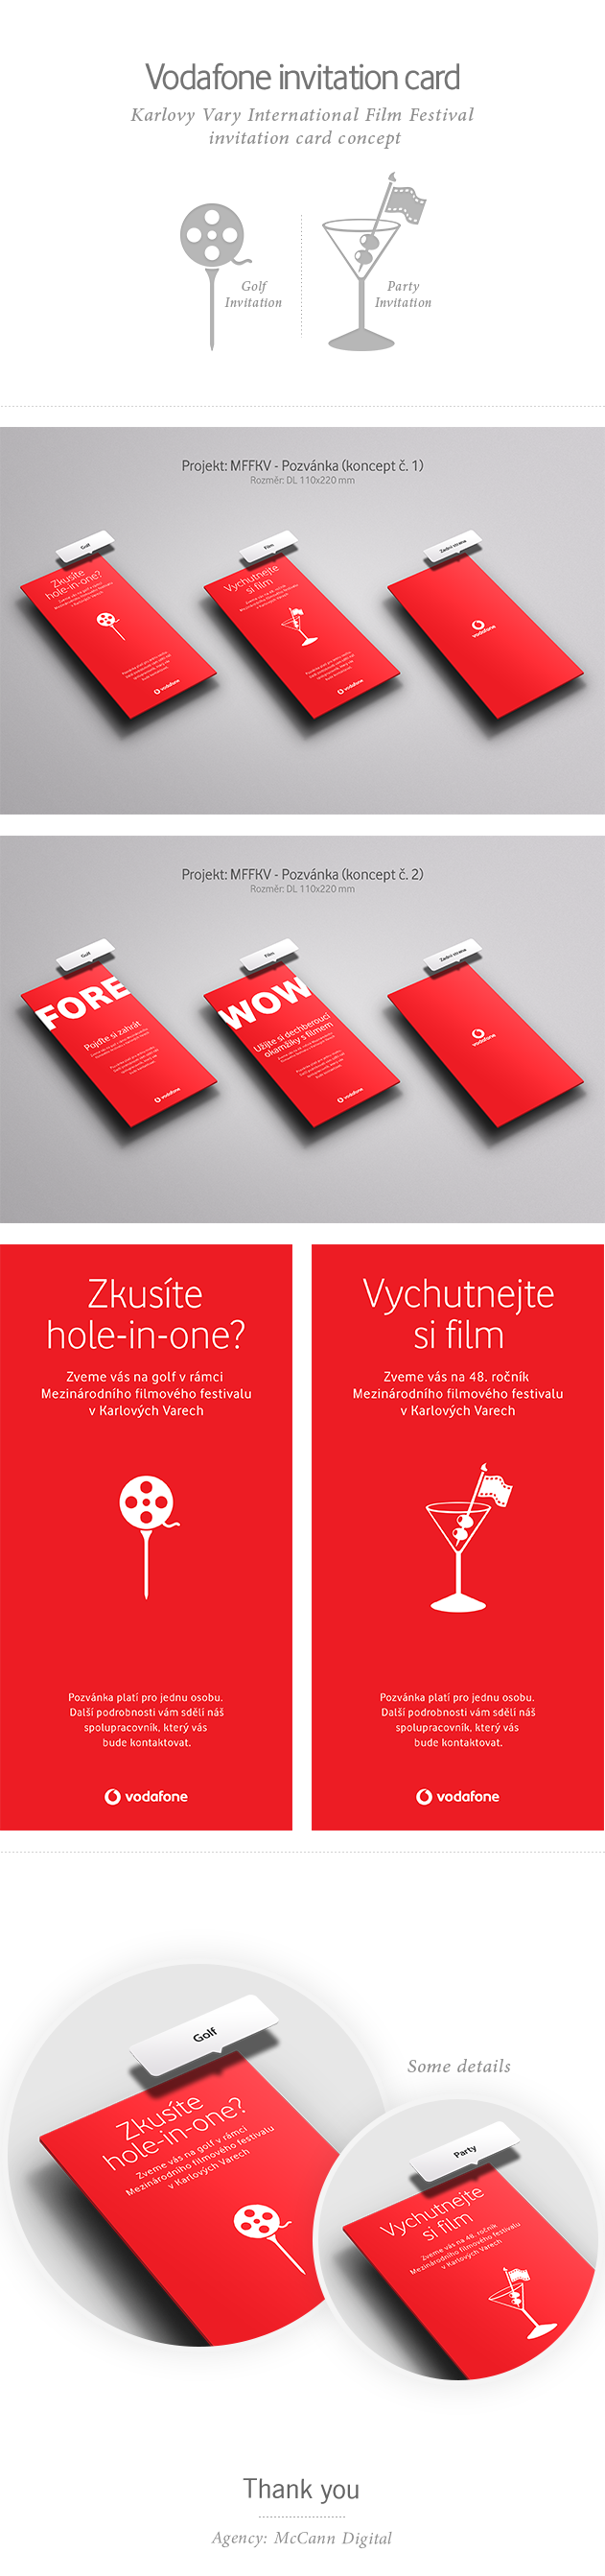 vodafone print Icon golf MFFKV Invitation Card minimal design red